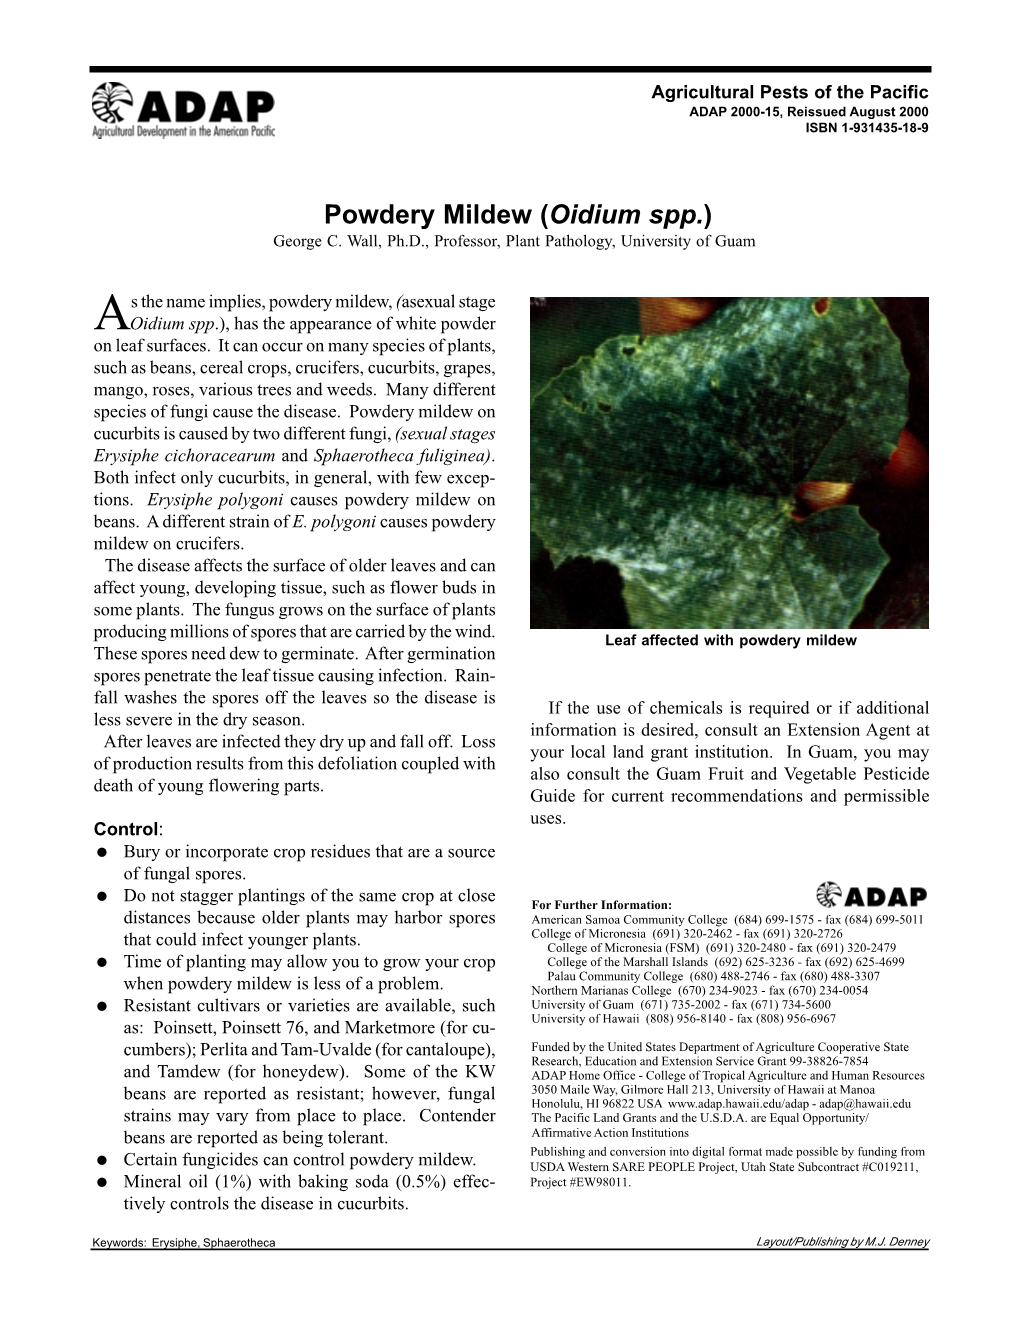 Powdery Mildew (Oidium Spp.) George C